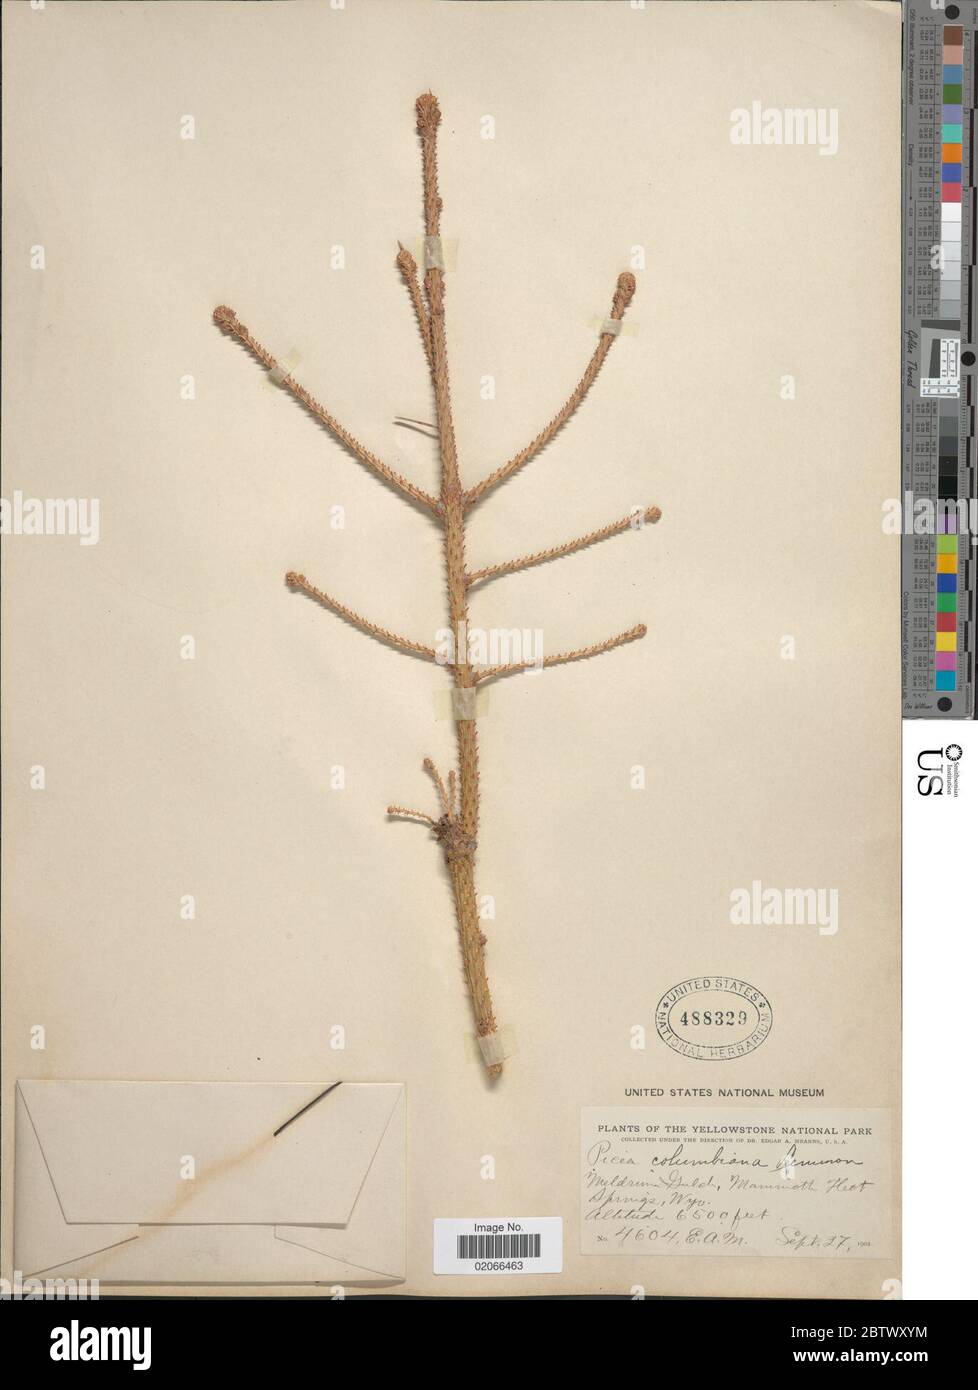 Picea engelmannii Parry ex Engelm. Stock Photo